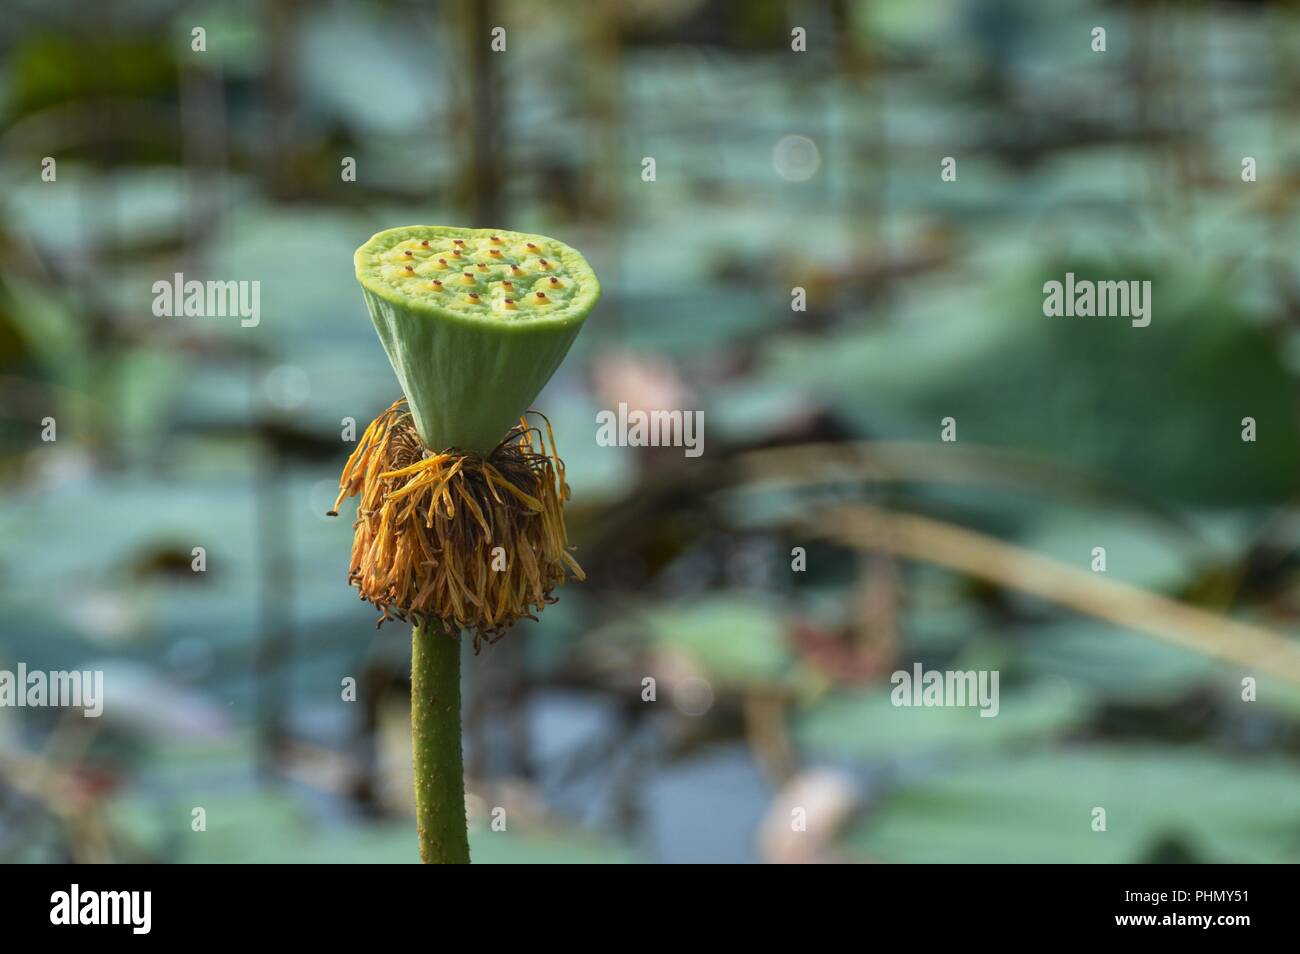 a lotus flower bud Stock Photo